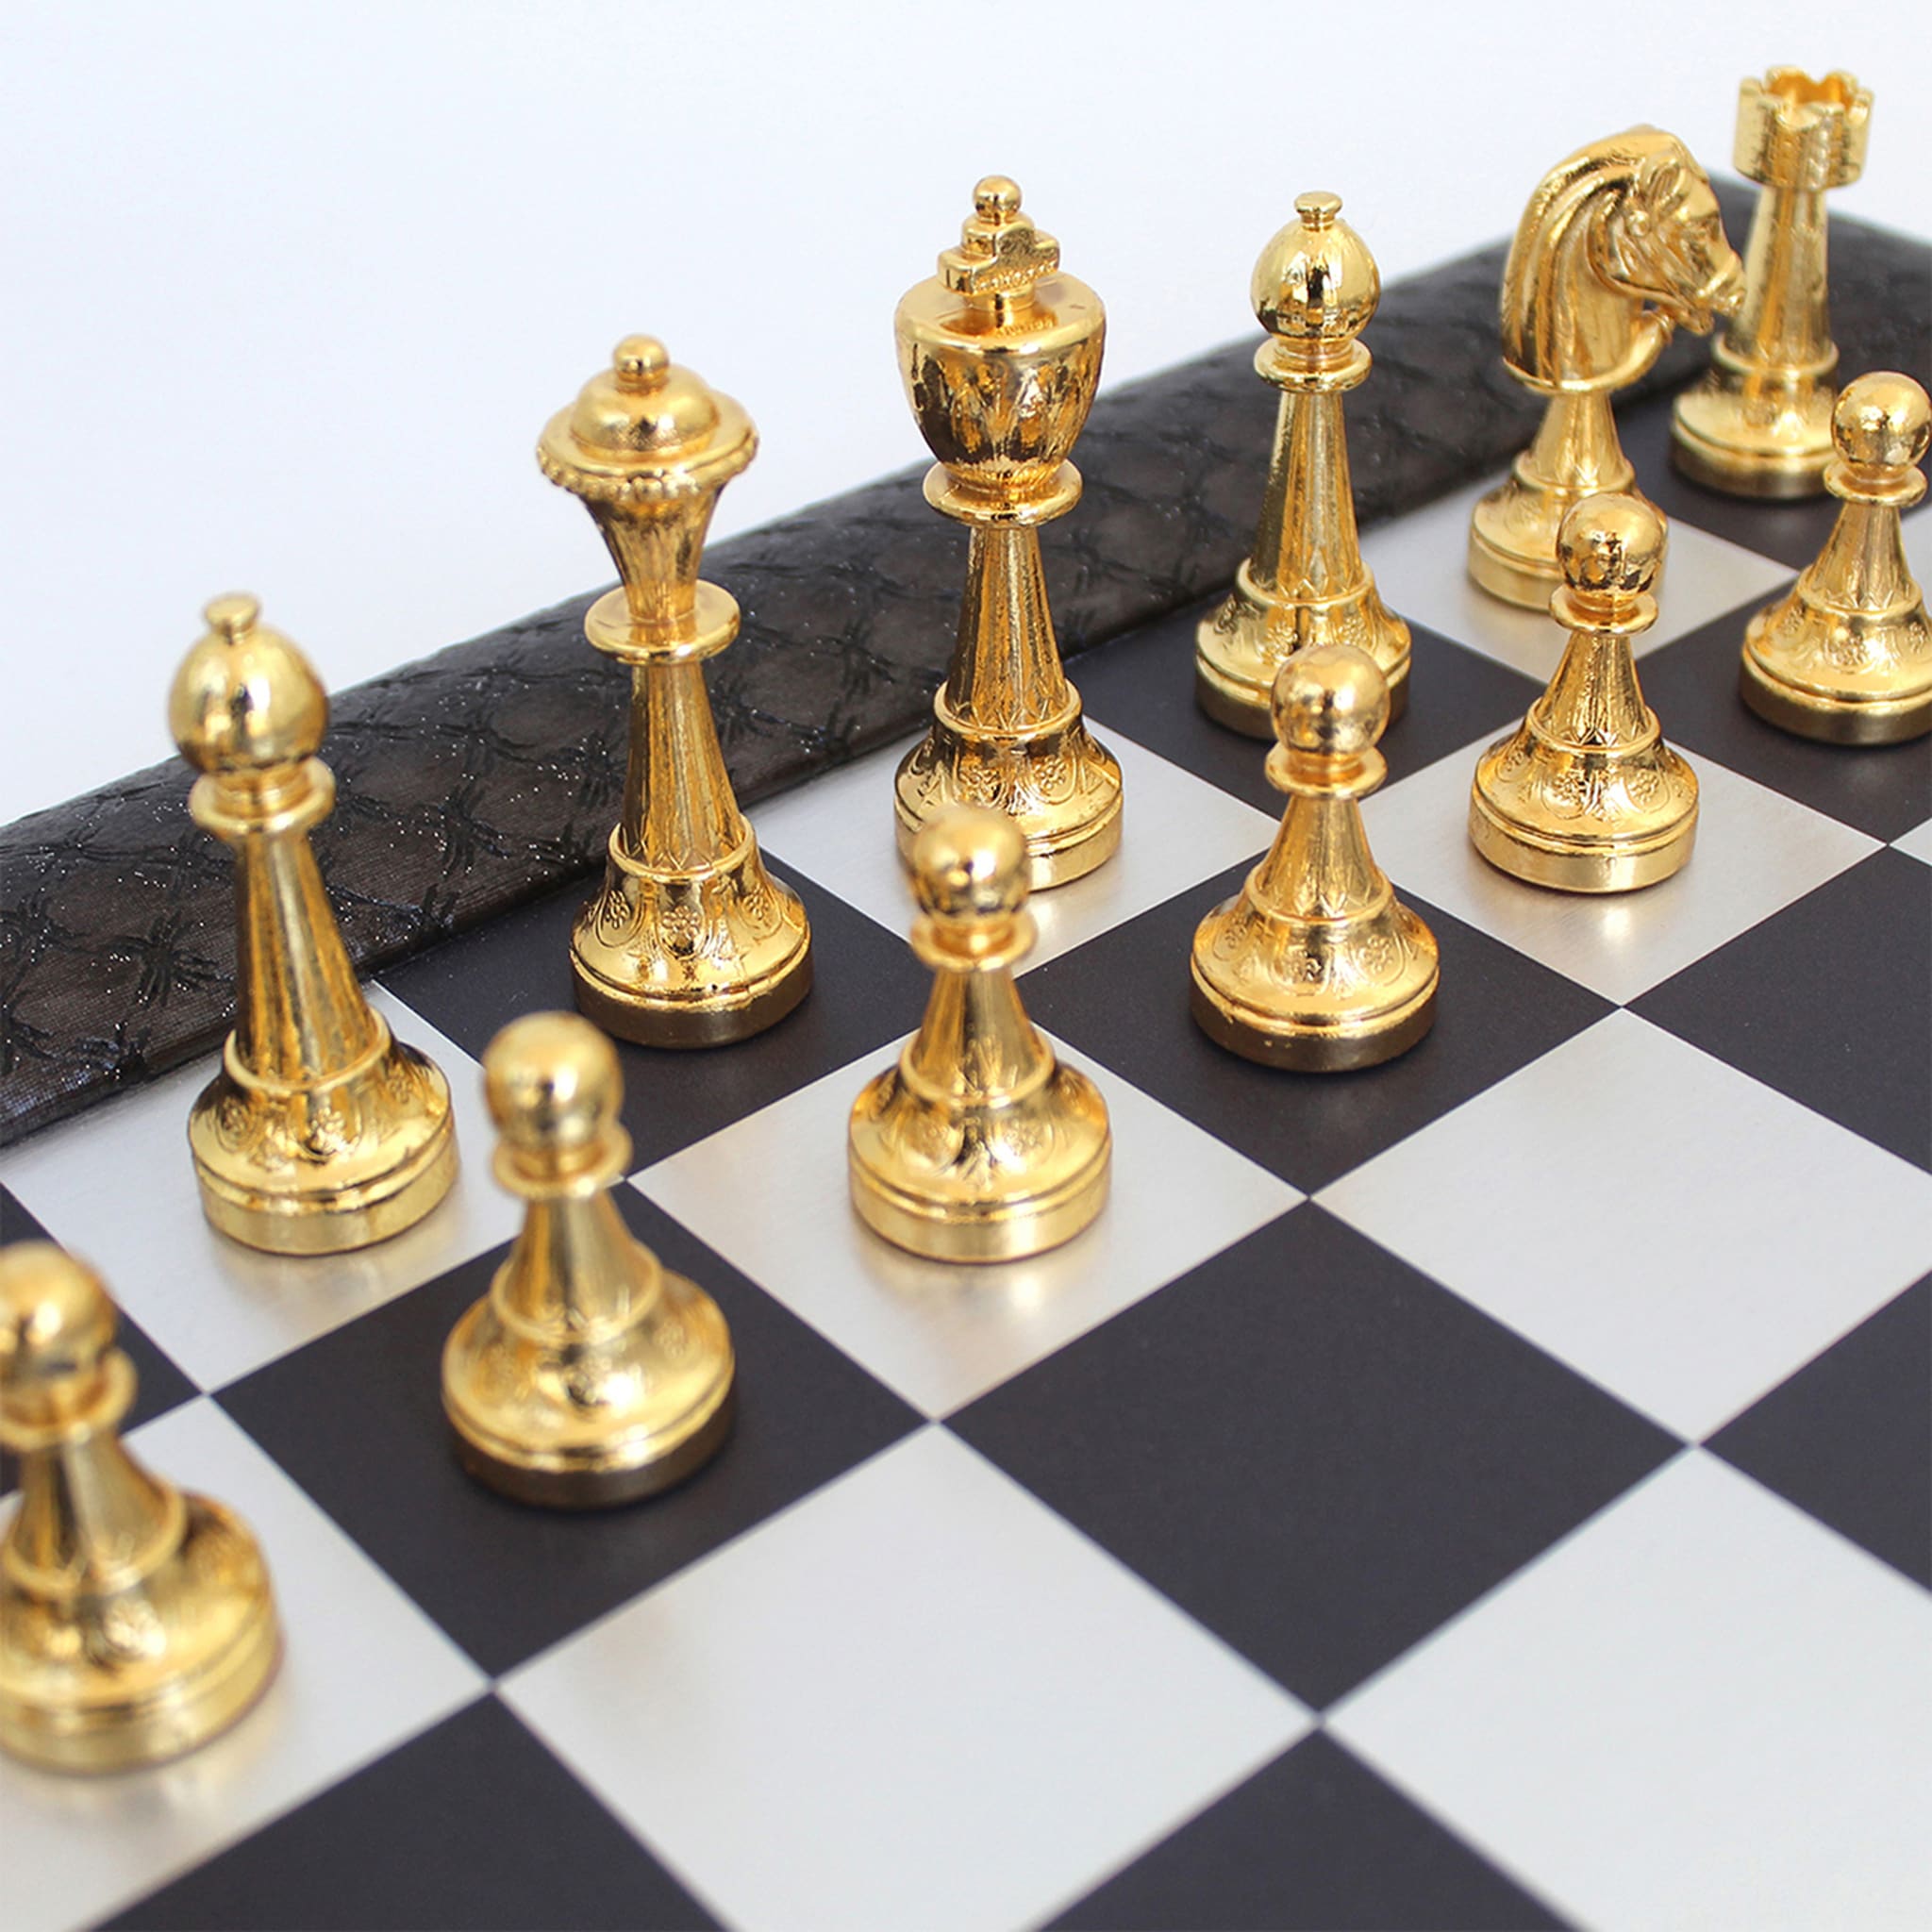 Staunton Elegance Chess Set - Alternative view 3